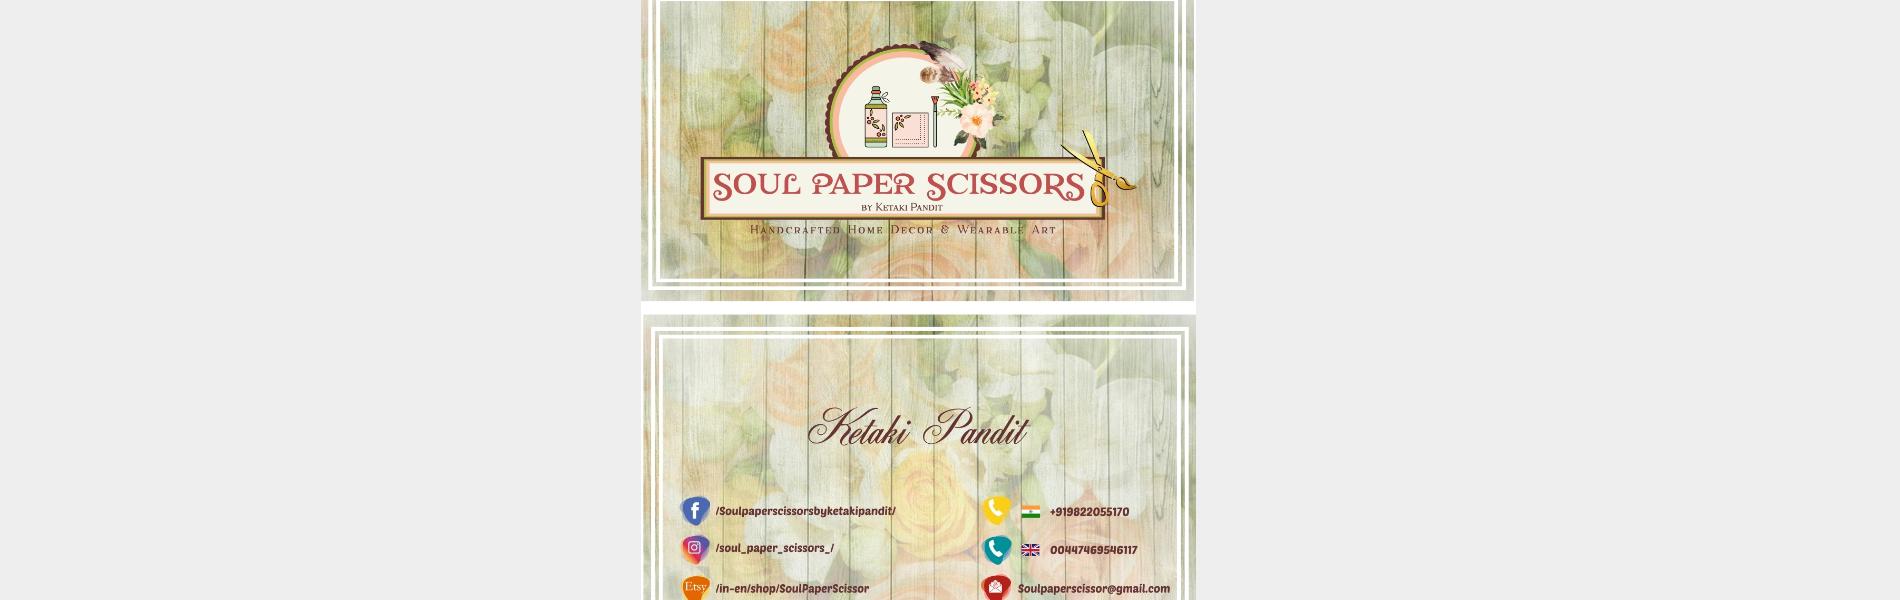 Soul Paper Scissors by Ketaki Pandit